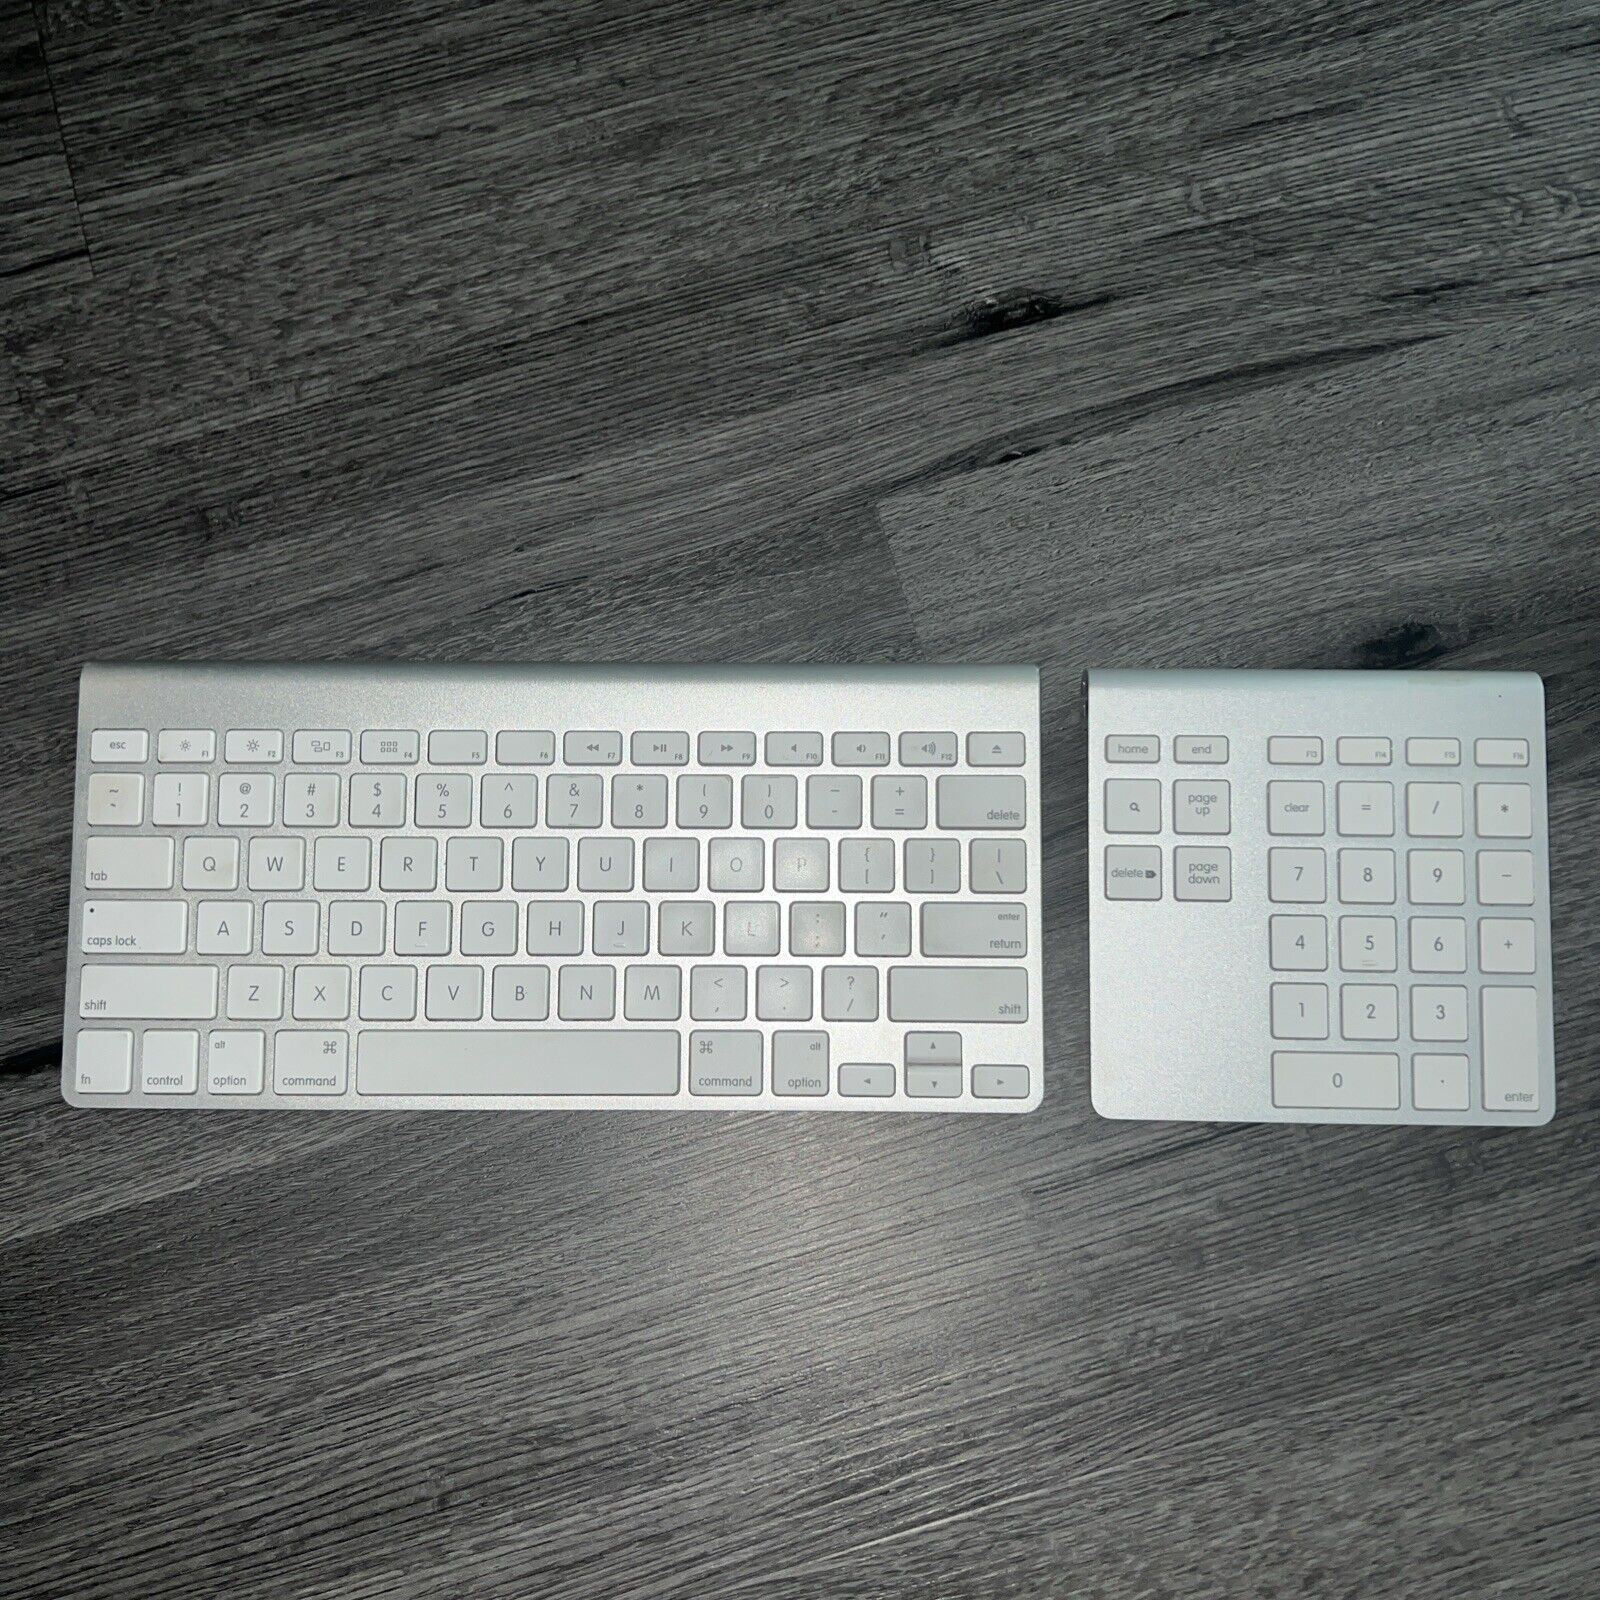 Apple A1314 Keyboard And Belkin F8T067 Keypad -Bluetooth -